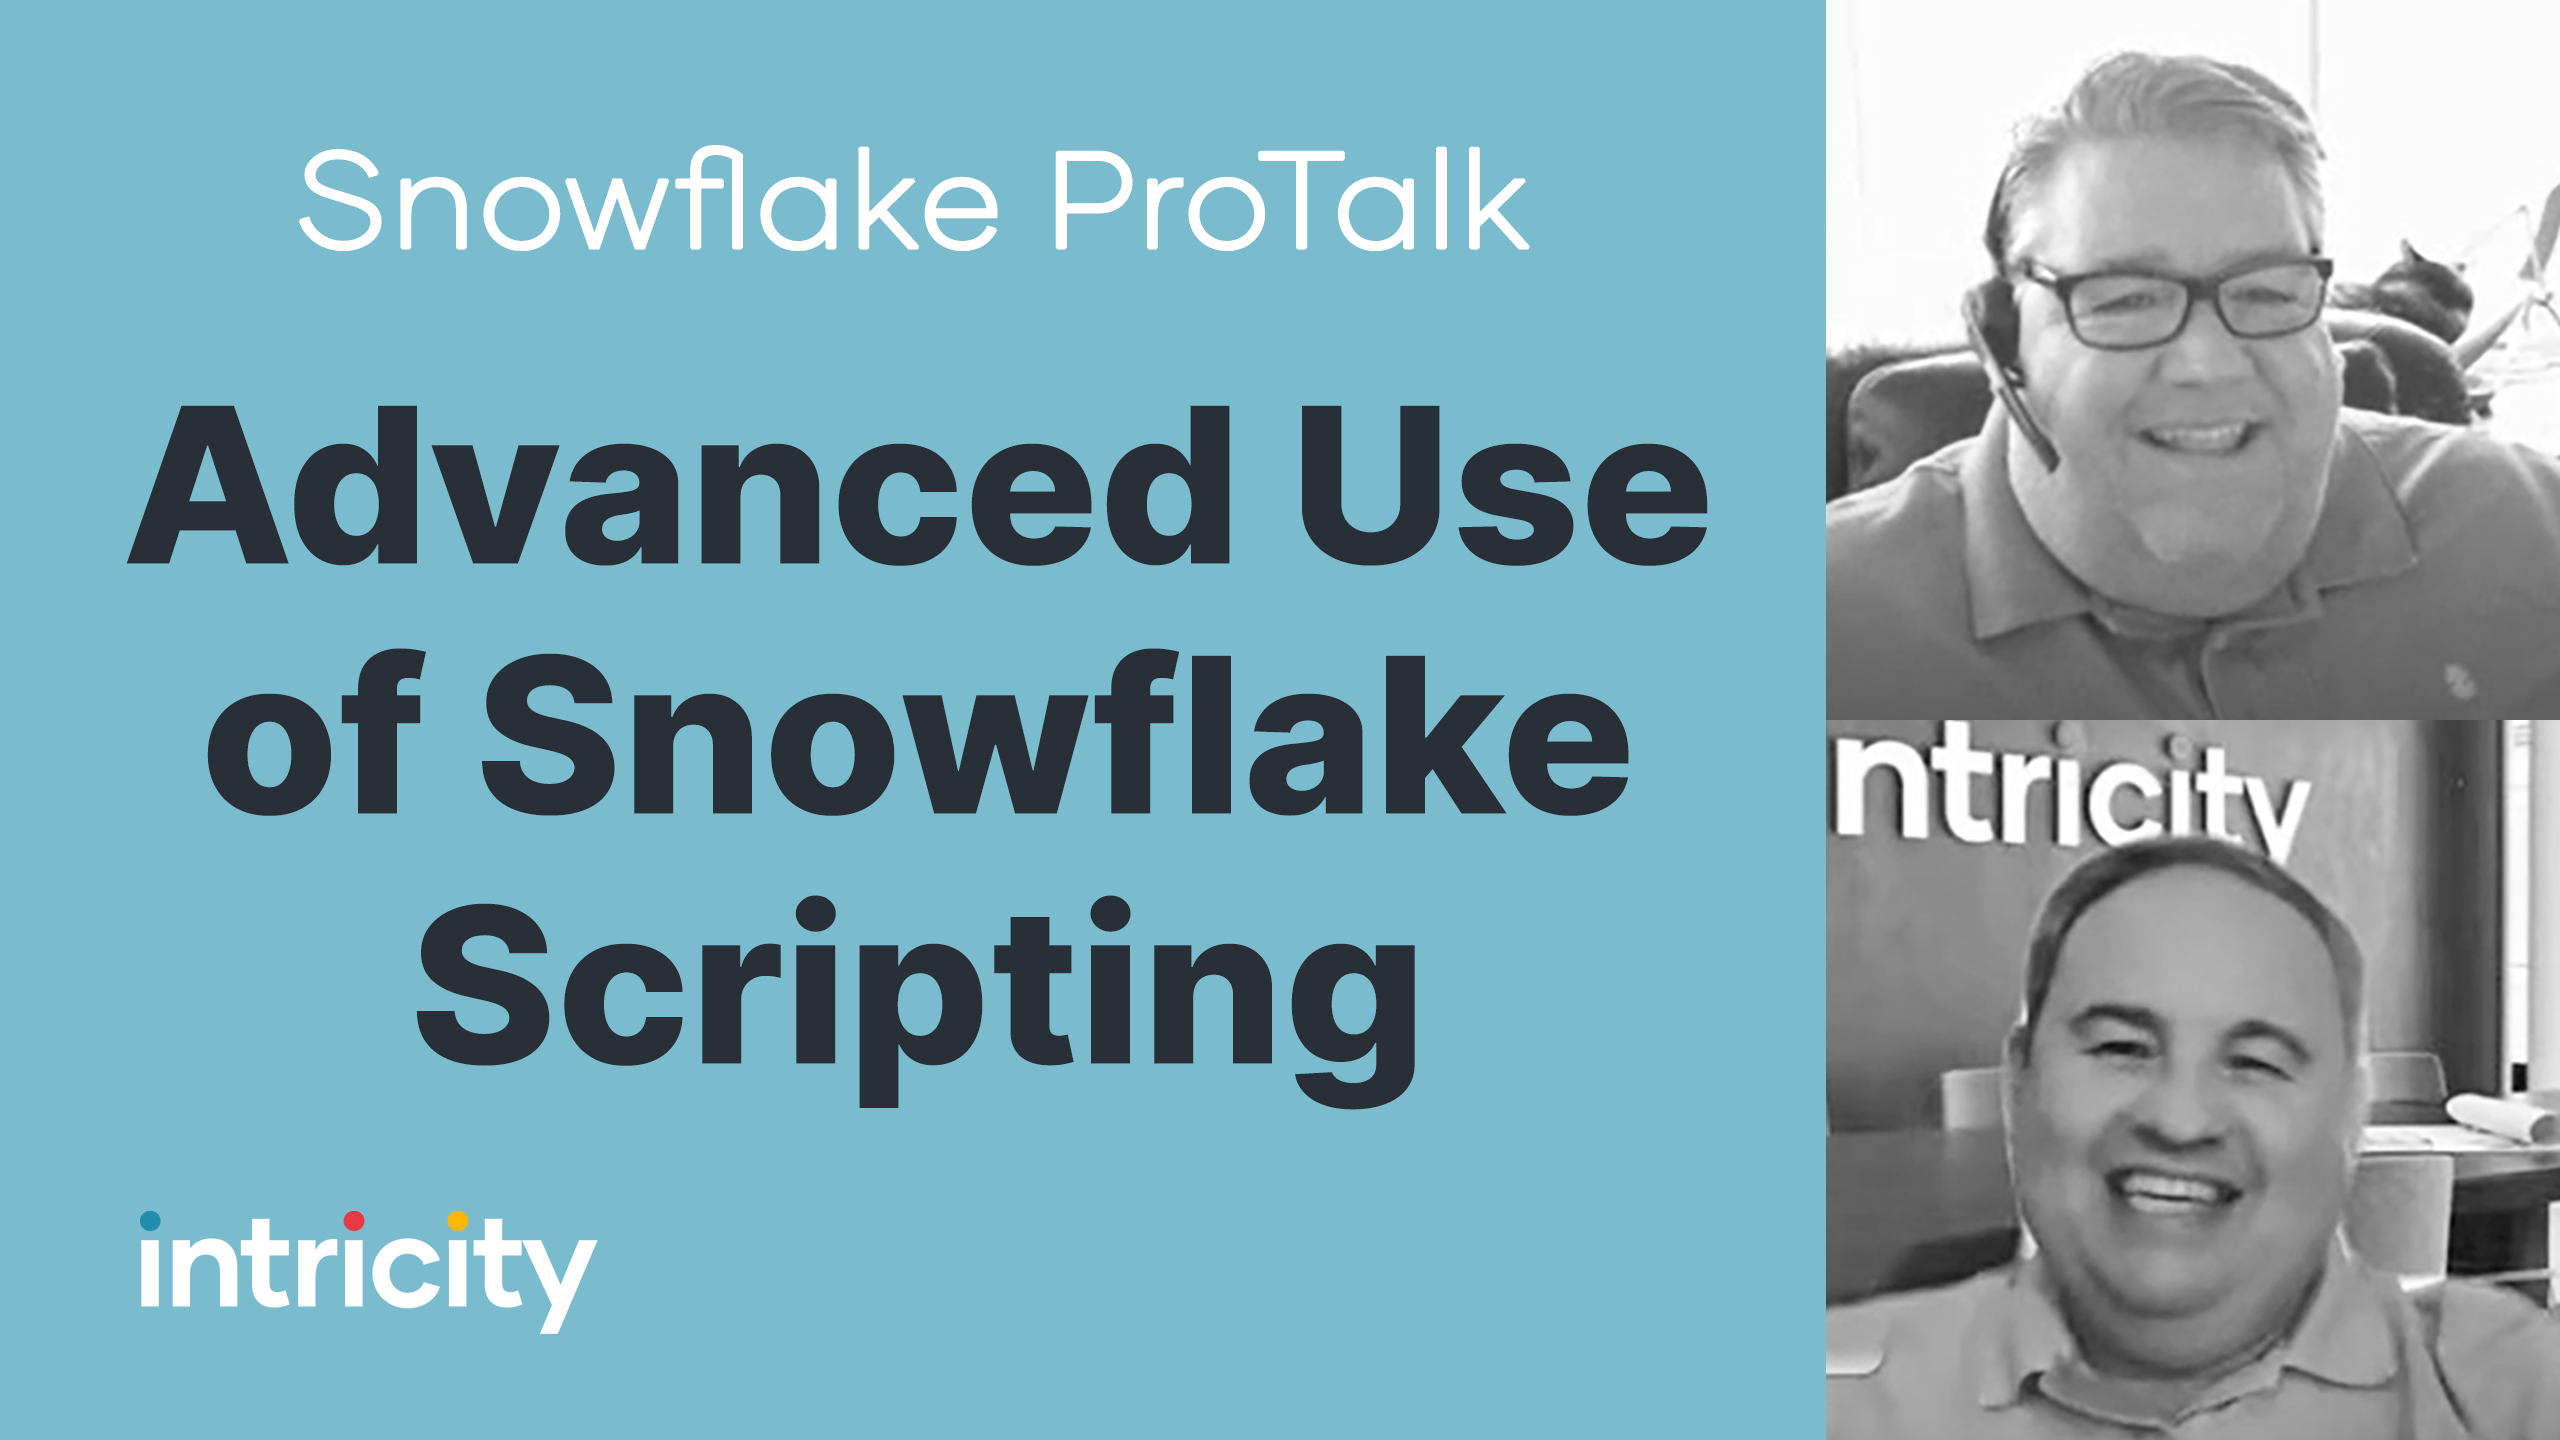 Snowflake ProTalk: Advanced Use of Snowflake Scripting